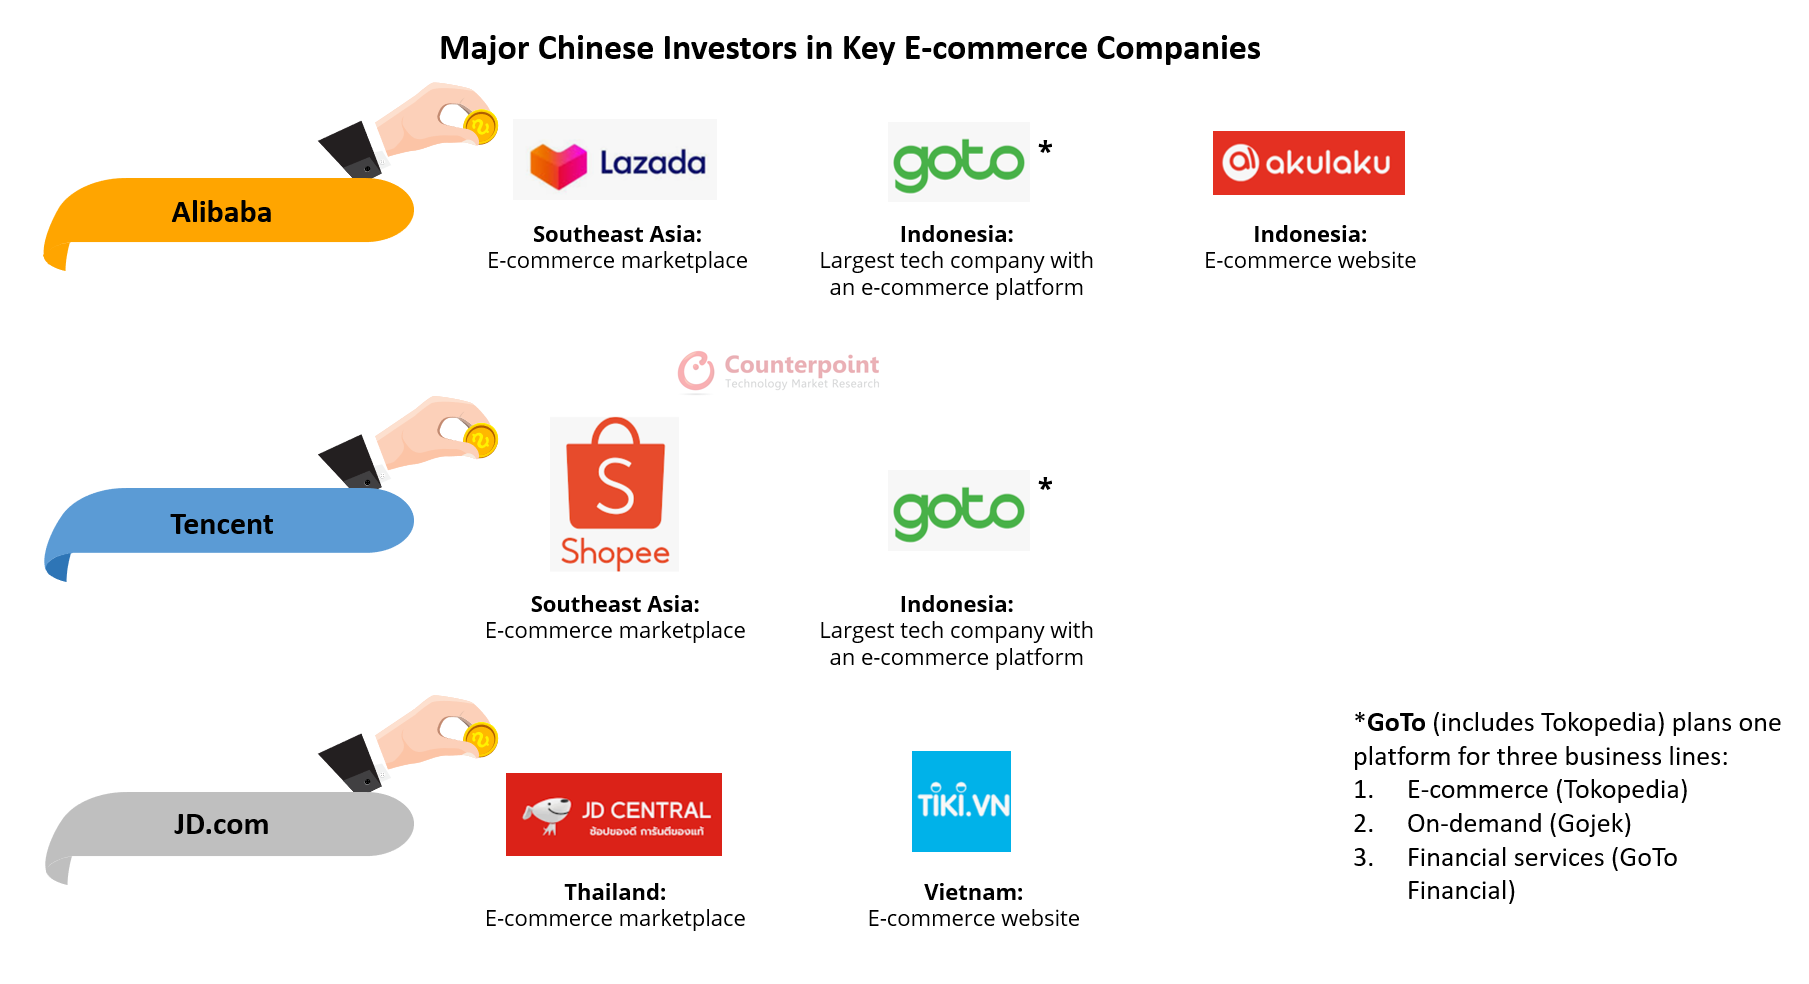 Counterpoint研究主要电子商务公司的主要中国投资者